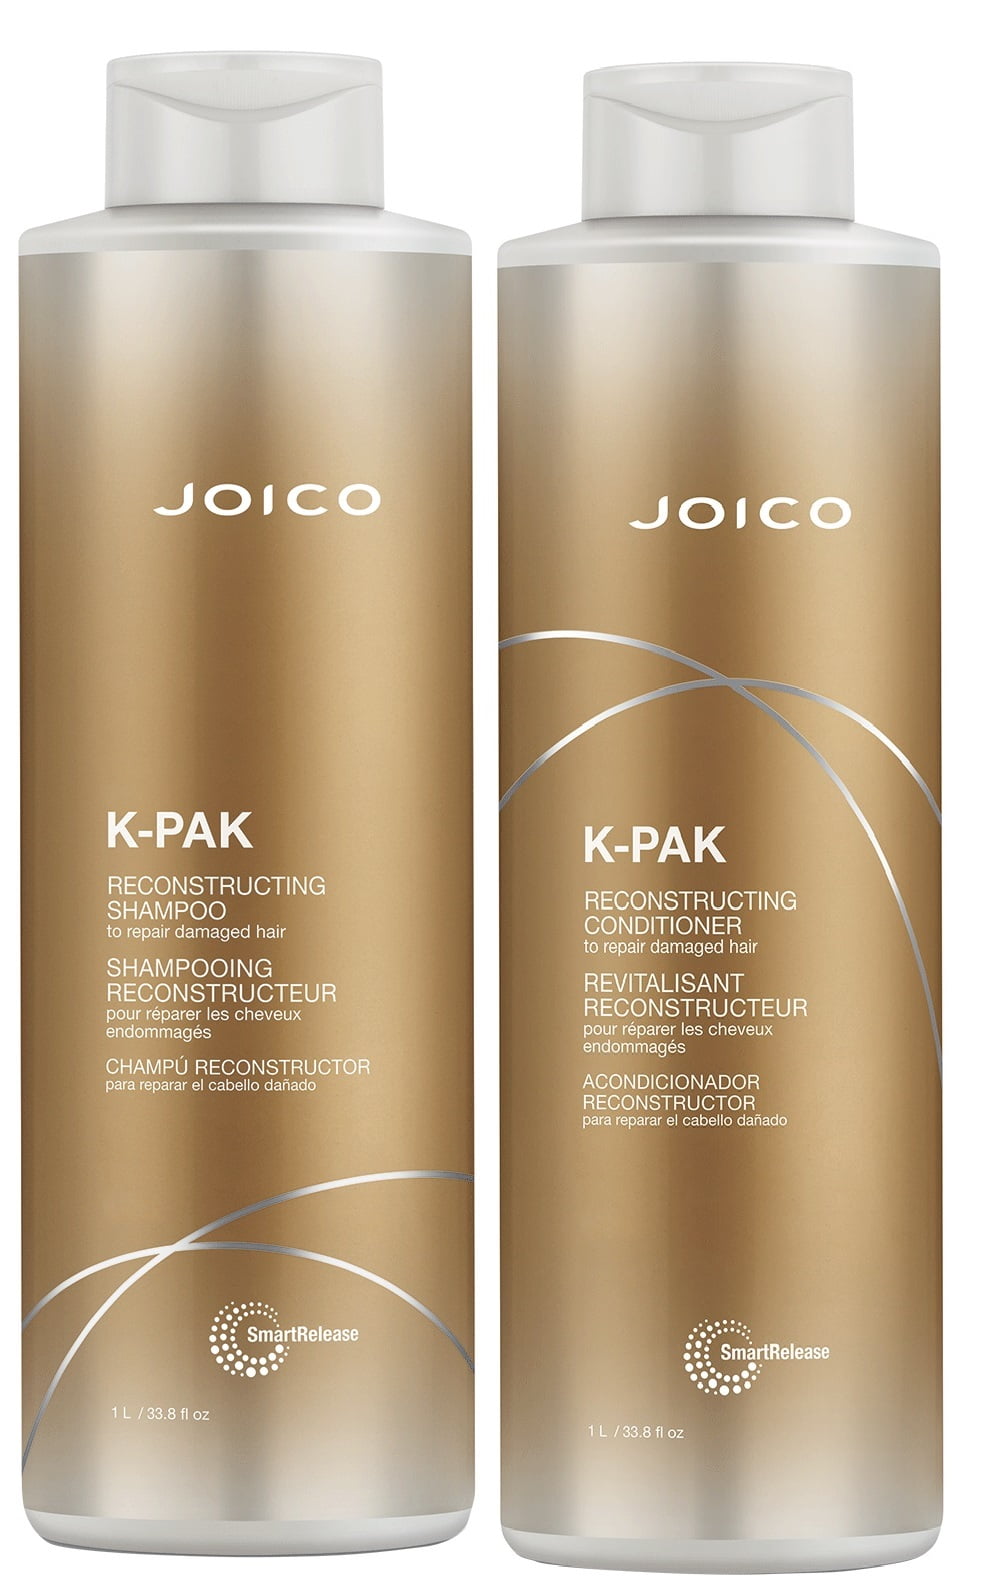 Joico K-Pak Shampoo and Conditioner Liter Duo Set, 33.8 oz